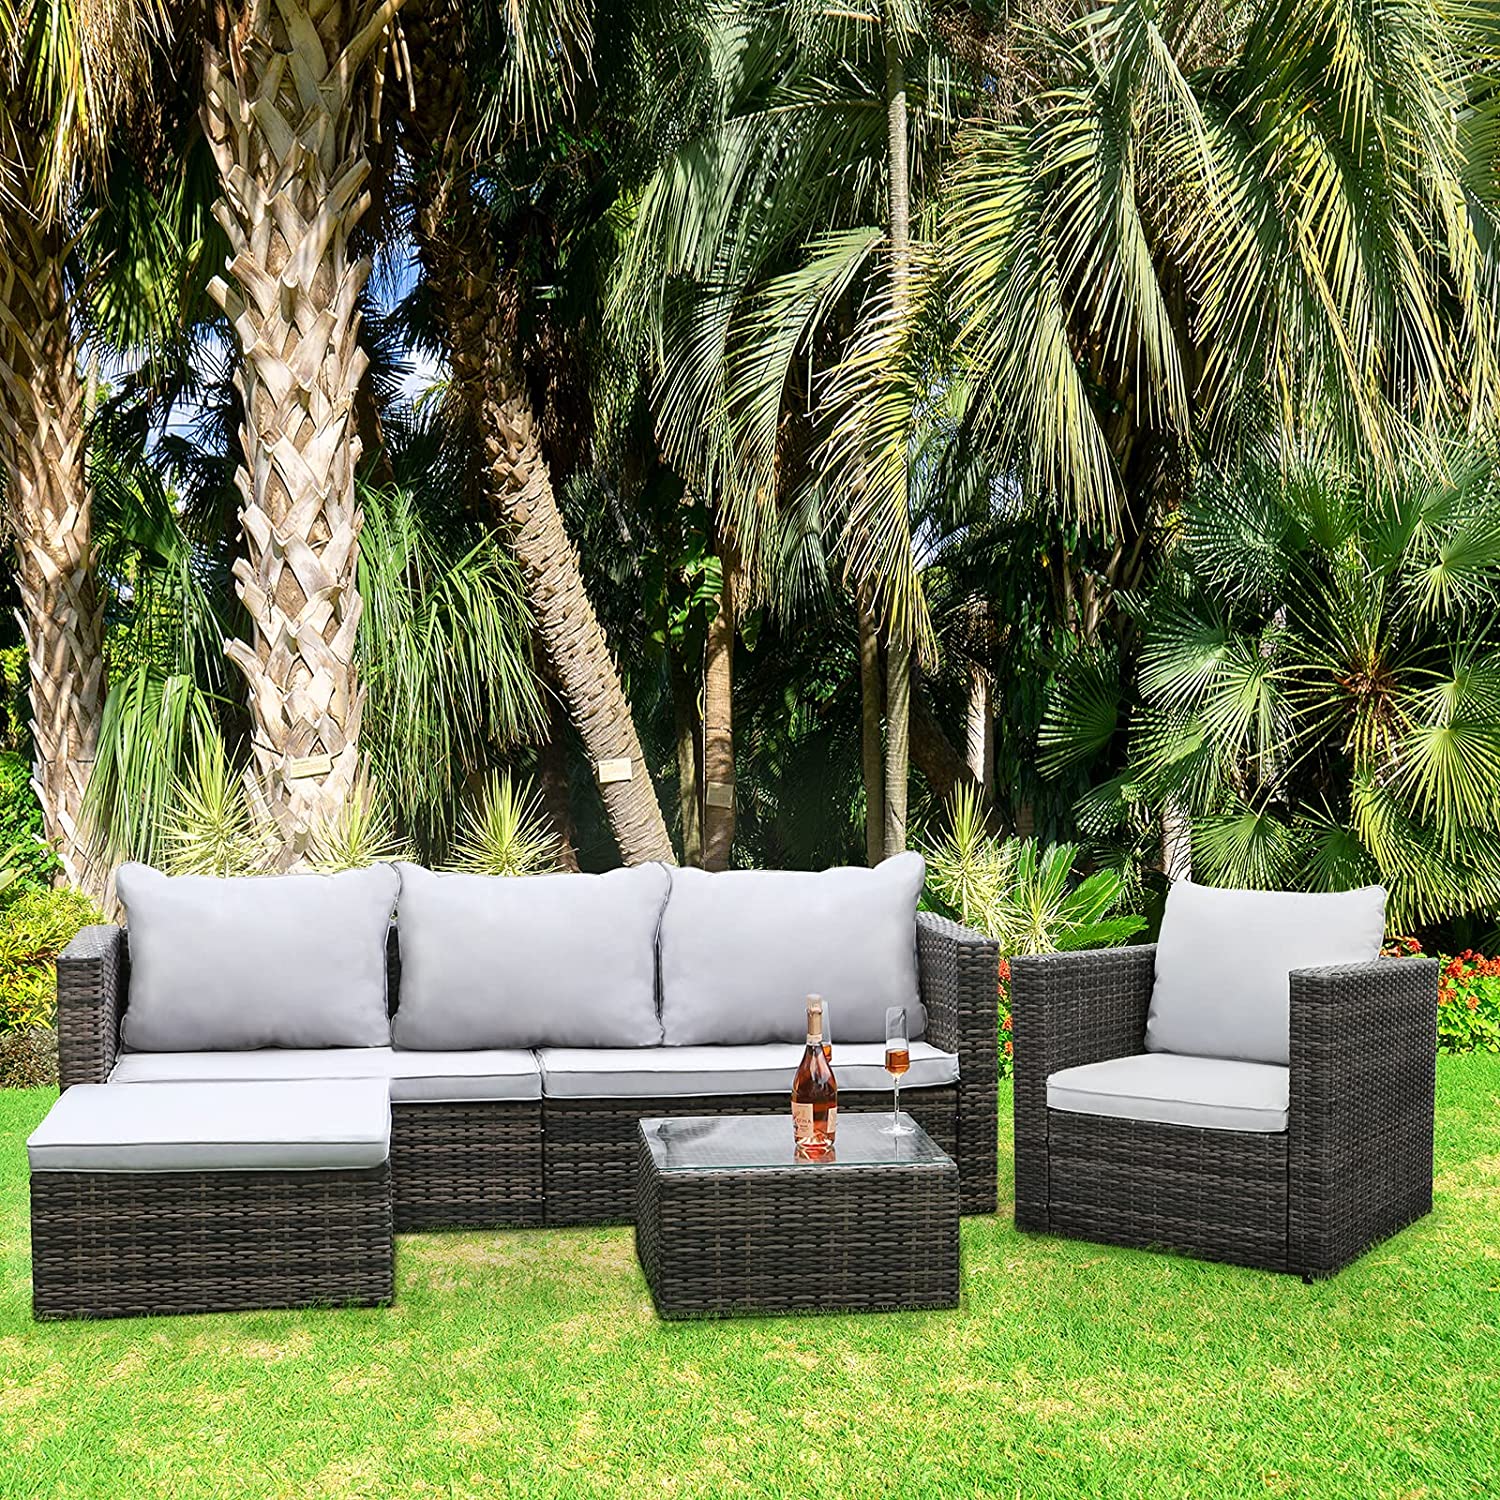 5 Piece Patio Furniture Sectional Sofa Set Outdoor Rattan Wicker